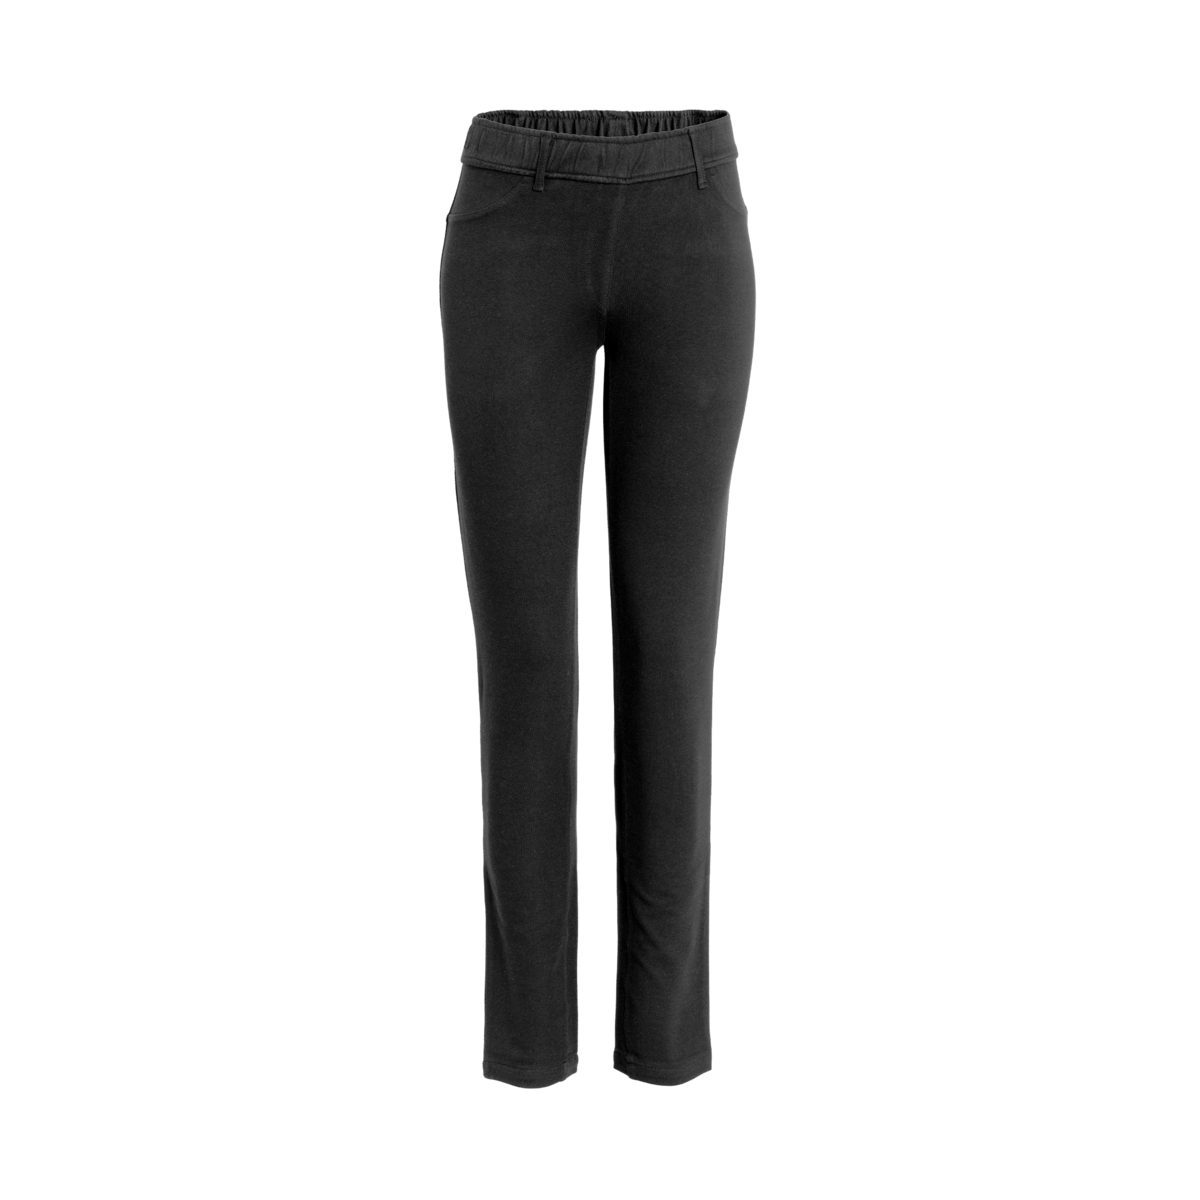 CRAFTS DENISE LIVING Jersey-Stoff in Treggings Jeans-Optik Black elastischer Bequemer,